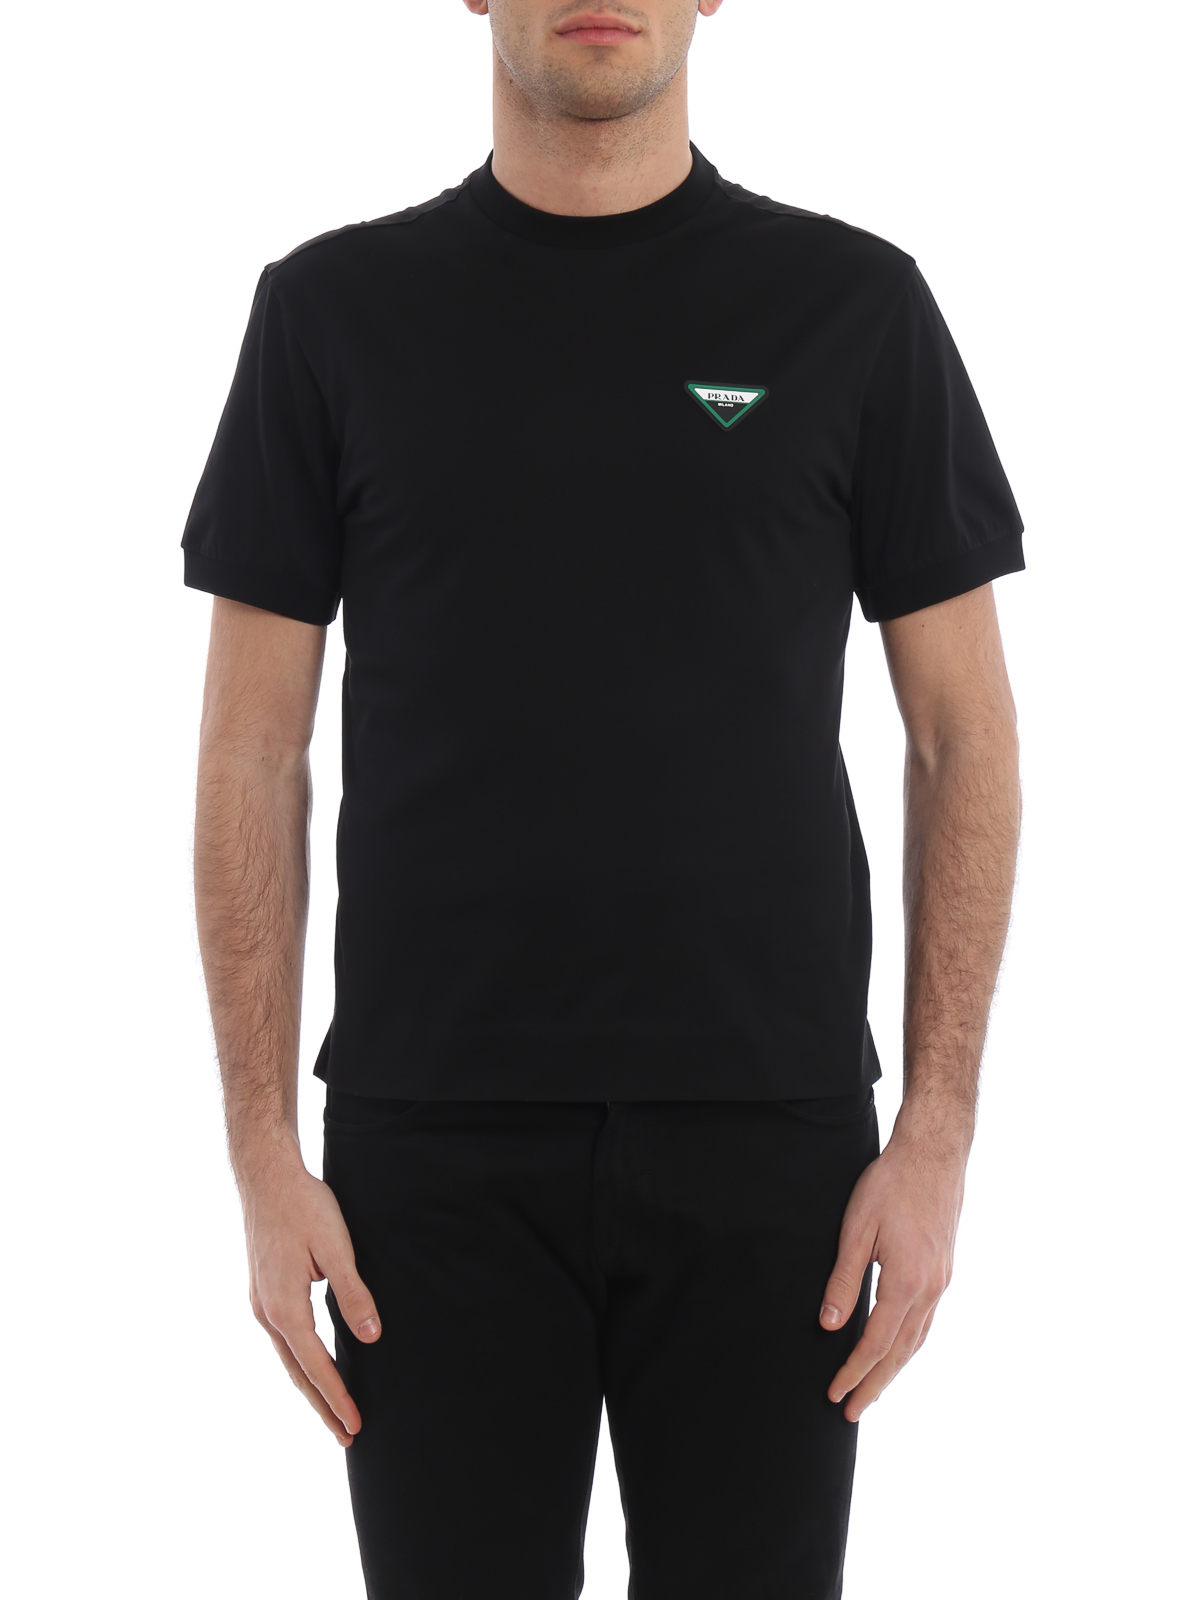 Tシャツ Prada - Tシャツ - 黒 - UJN558QYR002 | iKRIX shop online